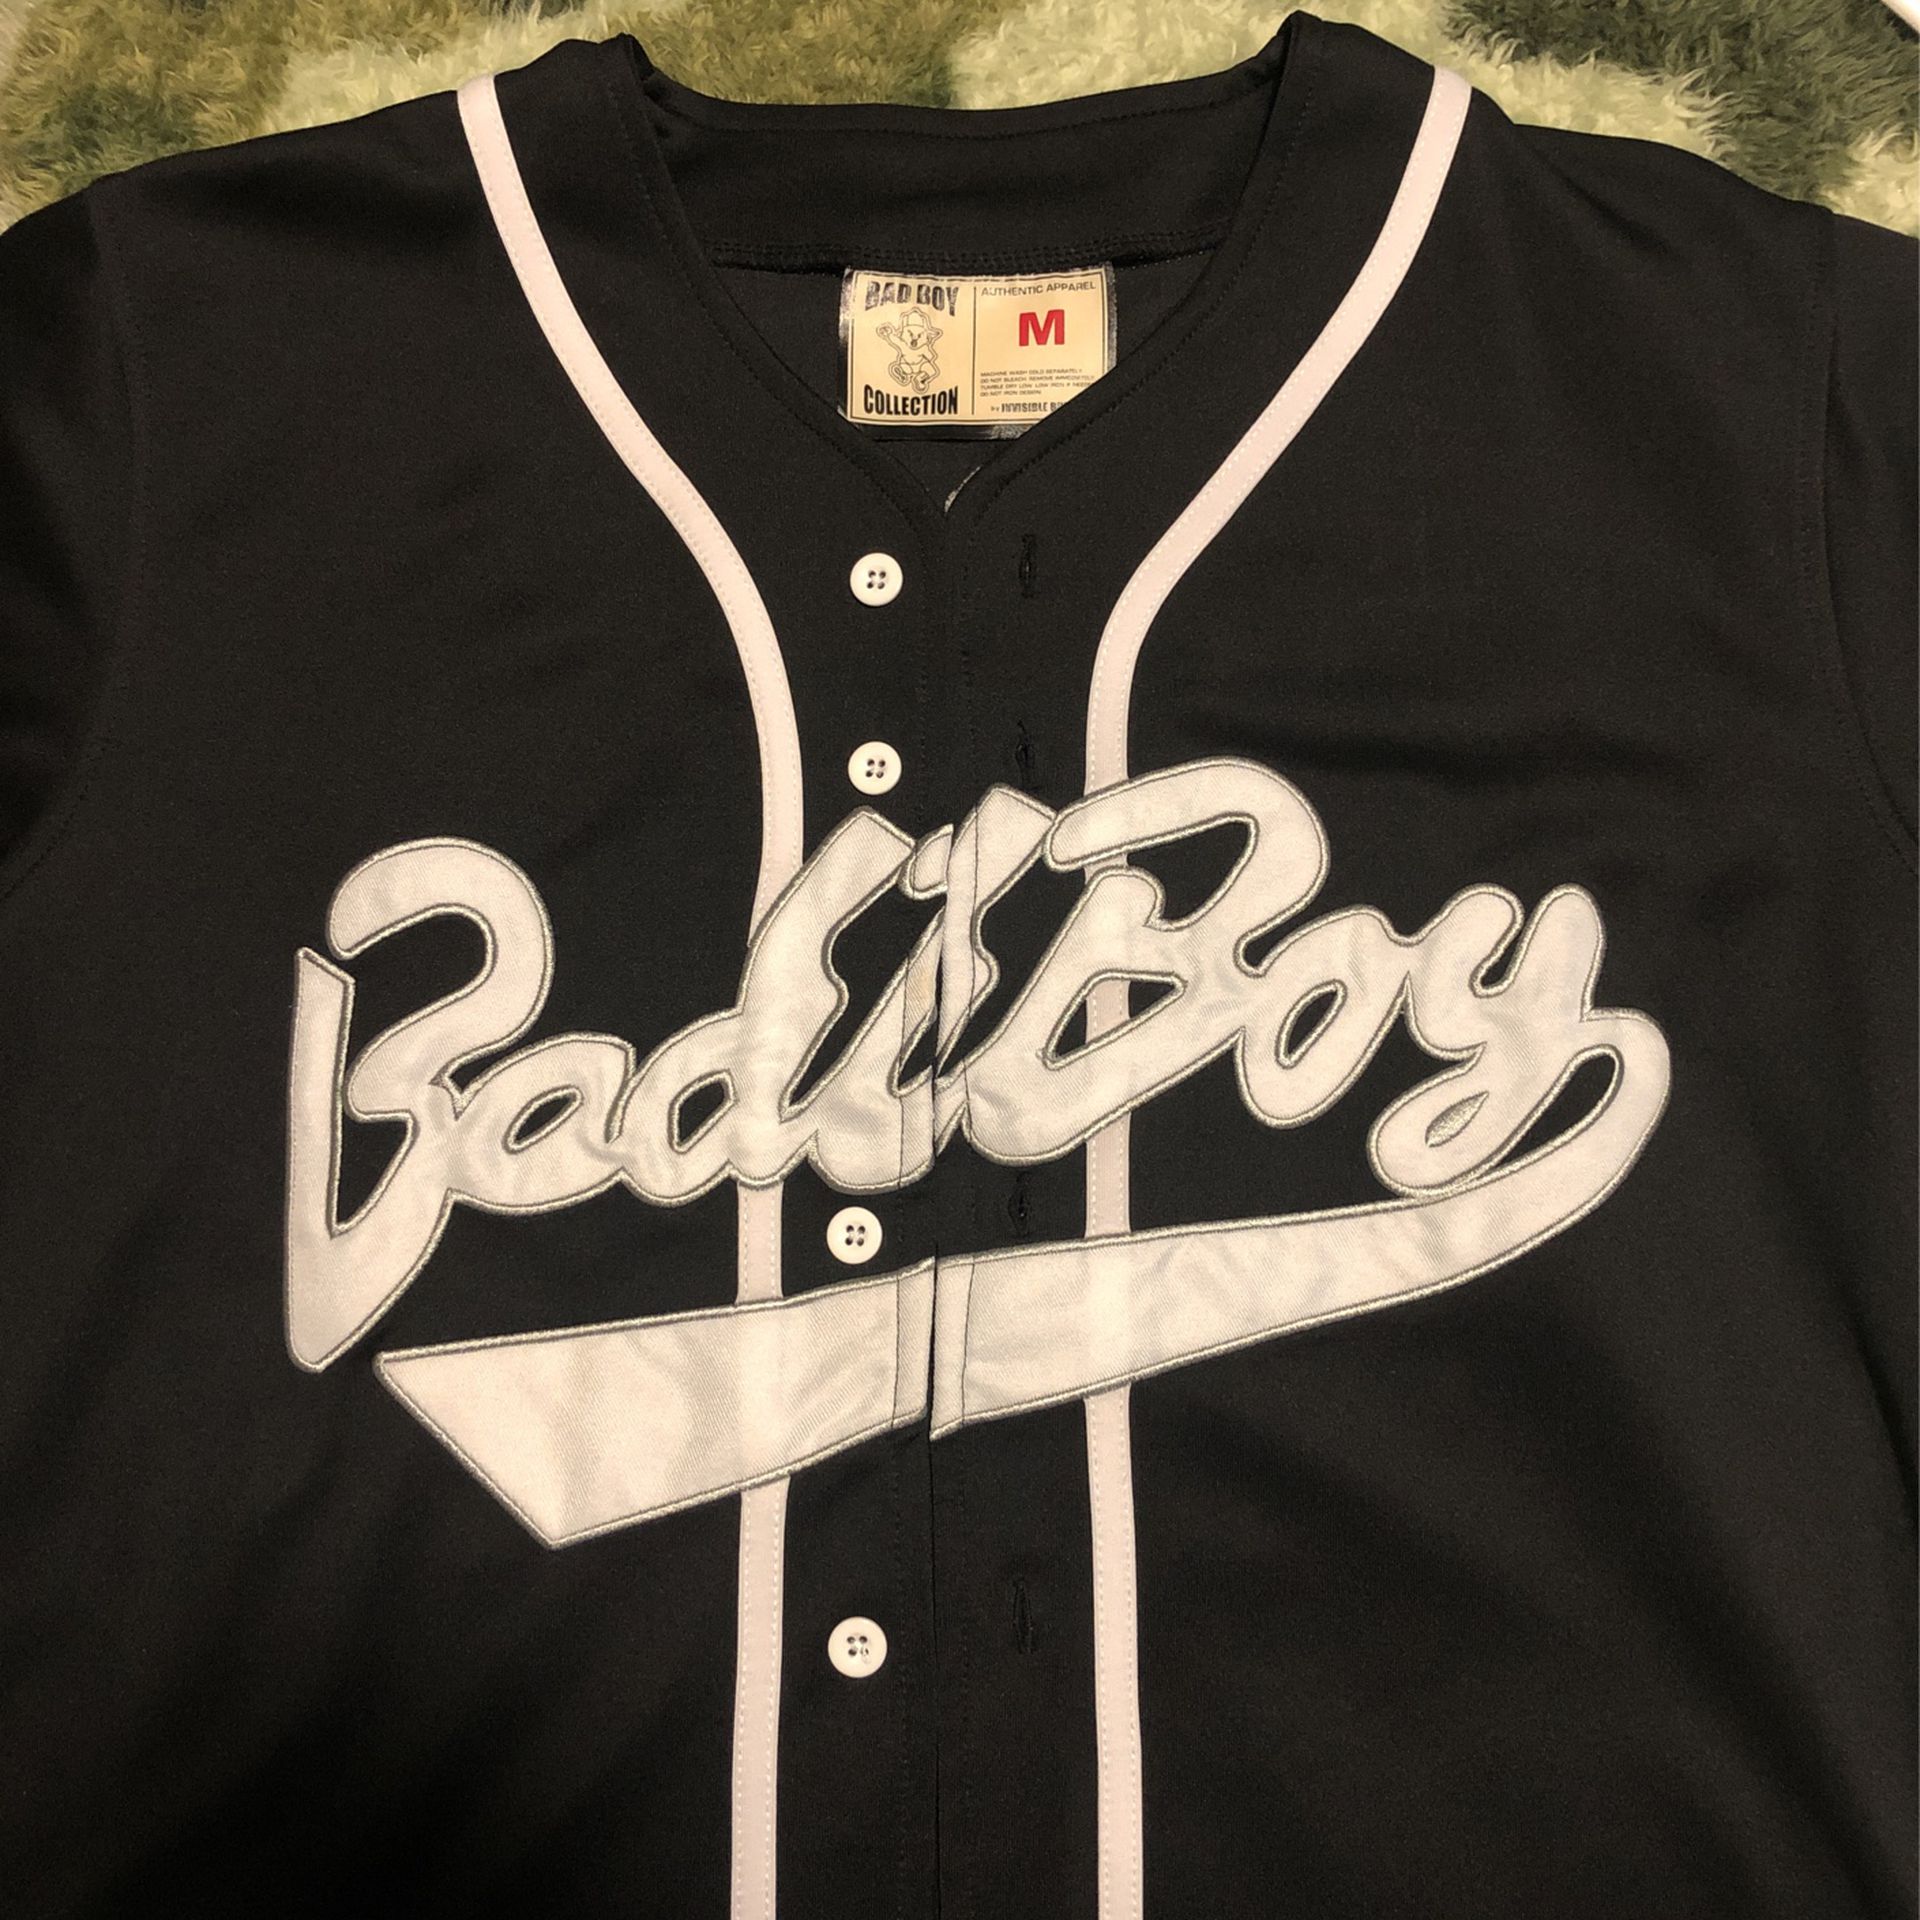 Bad Boy Biggie Baseball Jersey